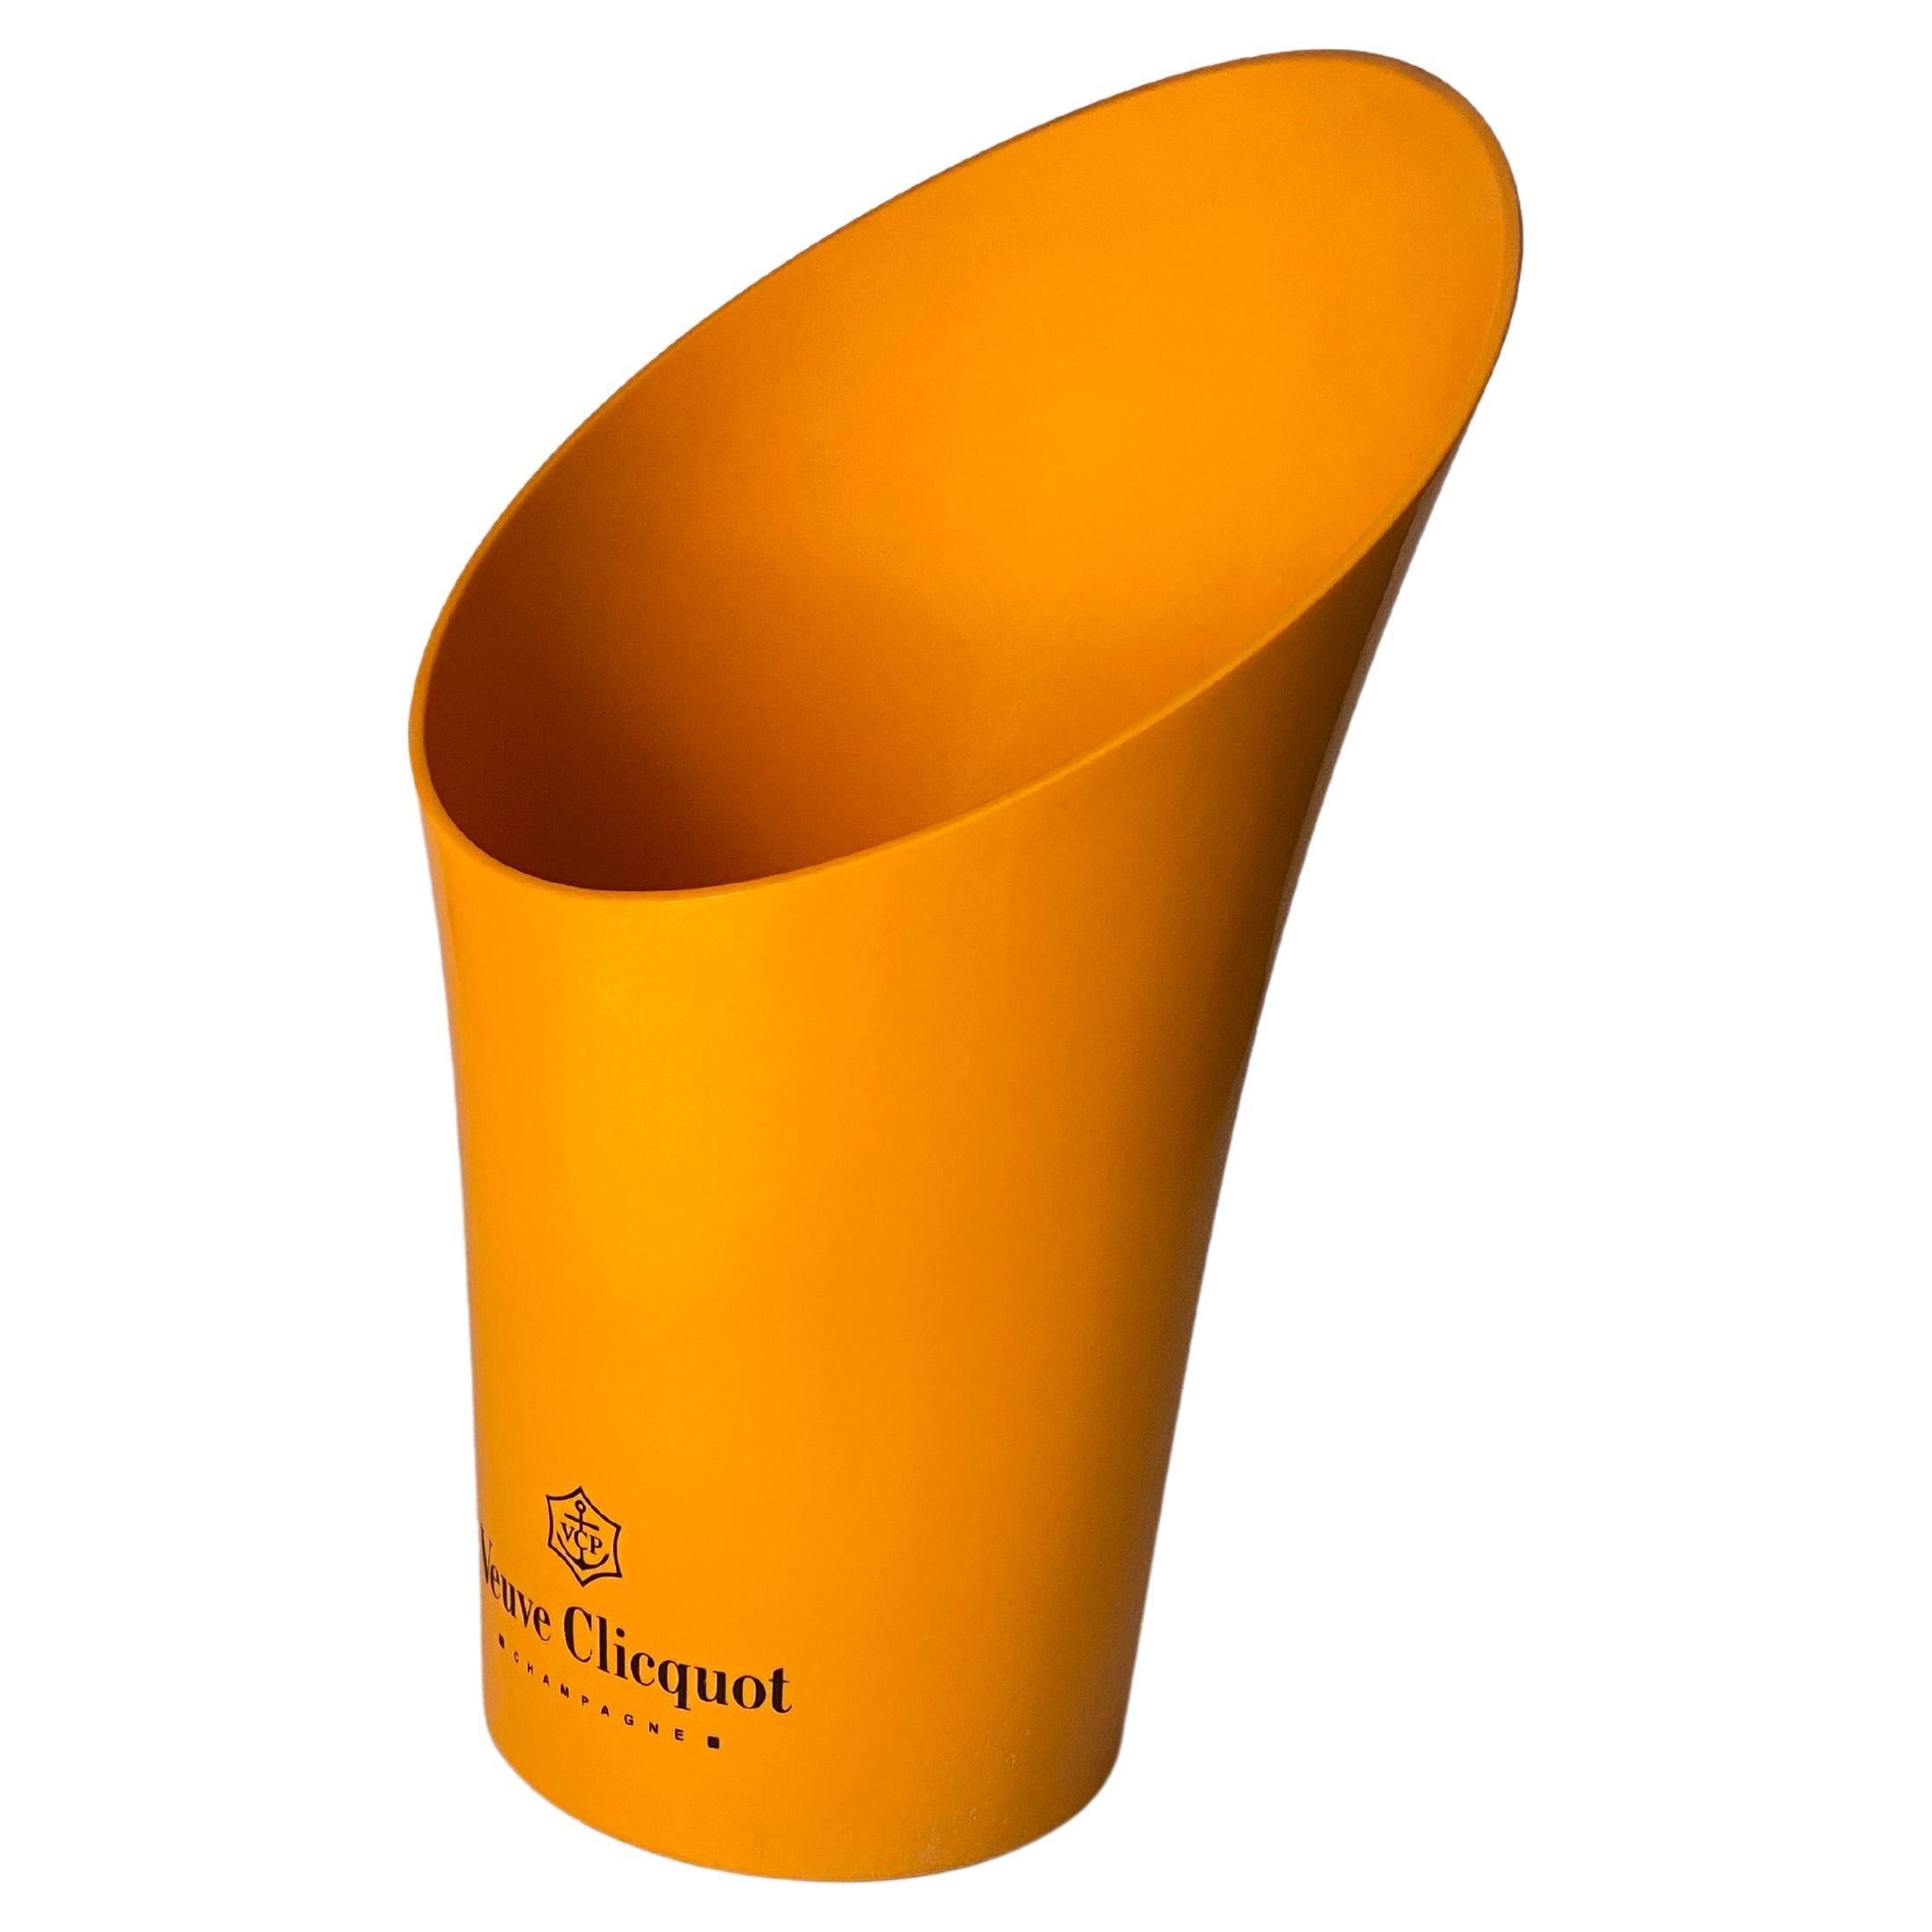 Champagne Bucket Veuve Cliquot in plastic Orange Color France 20th Century For Sale